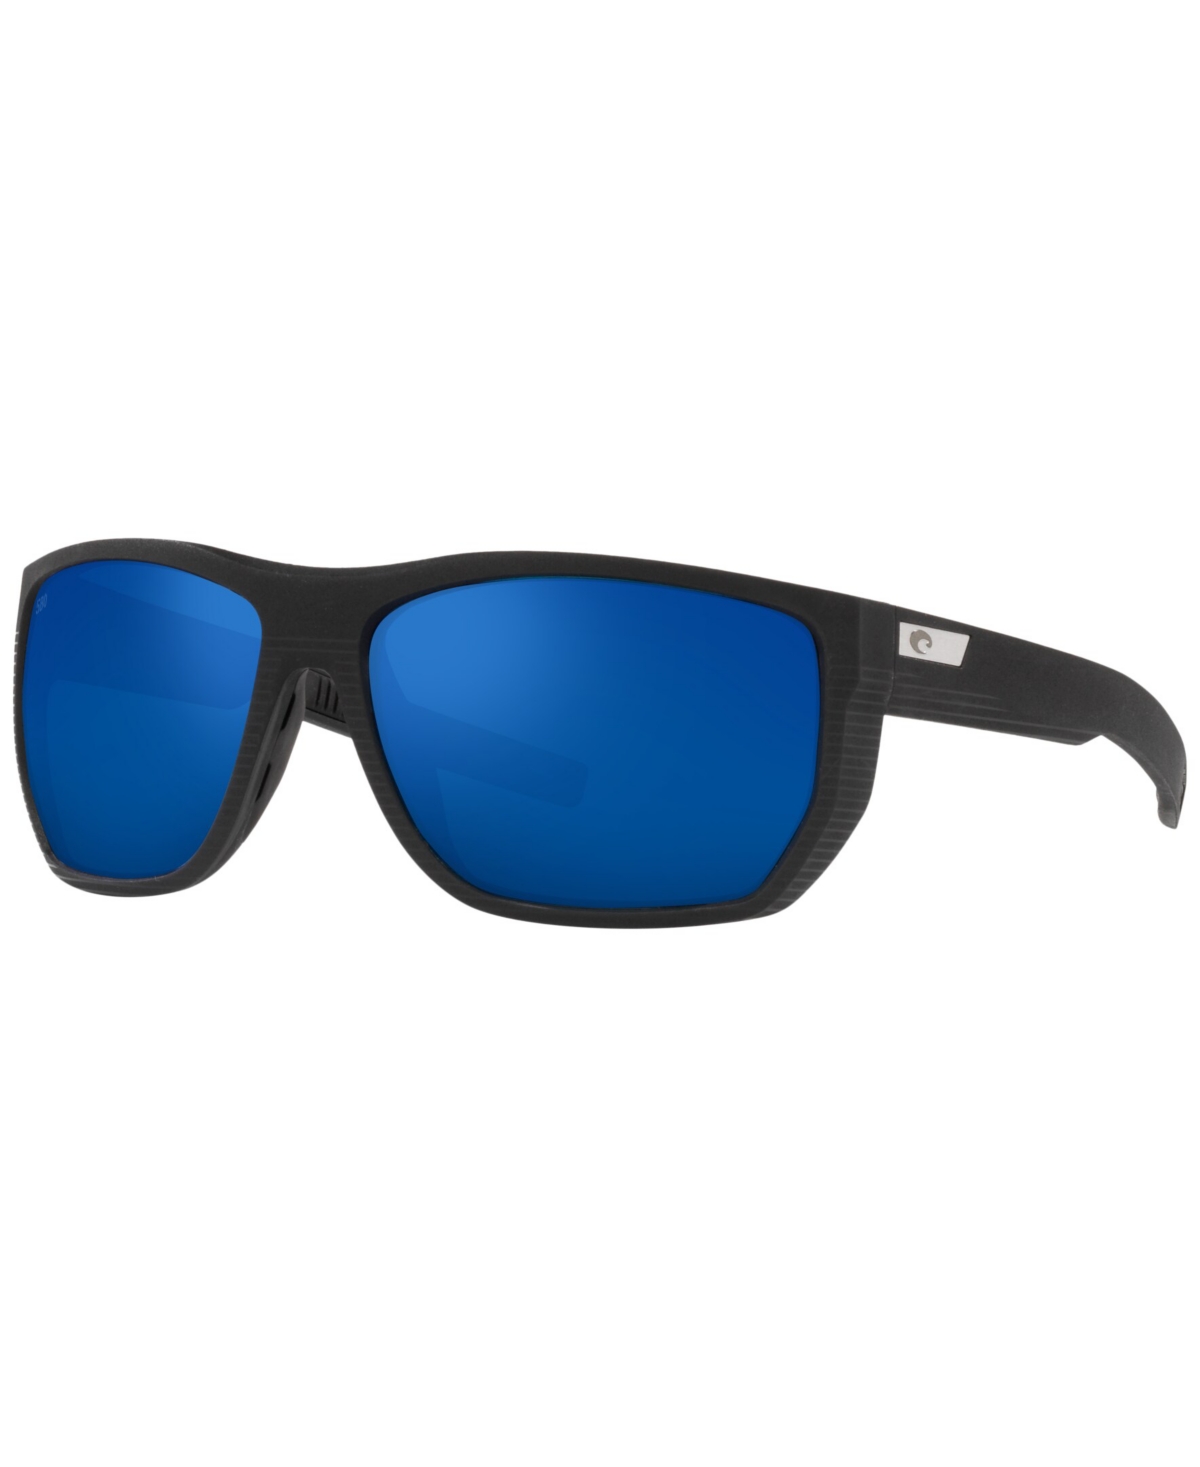 Men's Polarized Sunglasses, 06S9085 Santiago 63 - Black